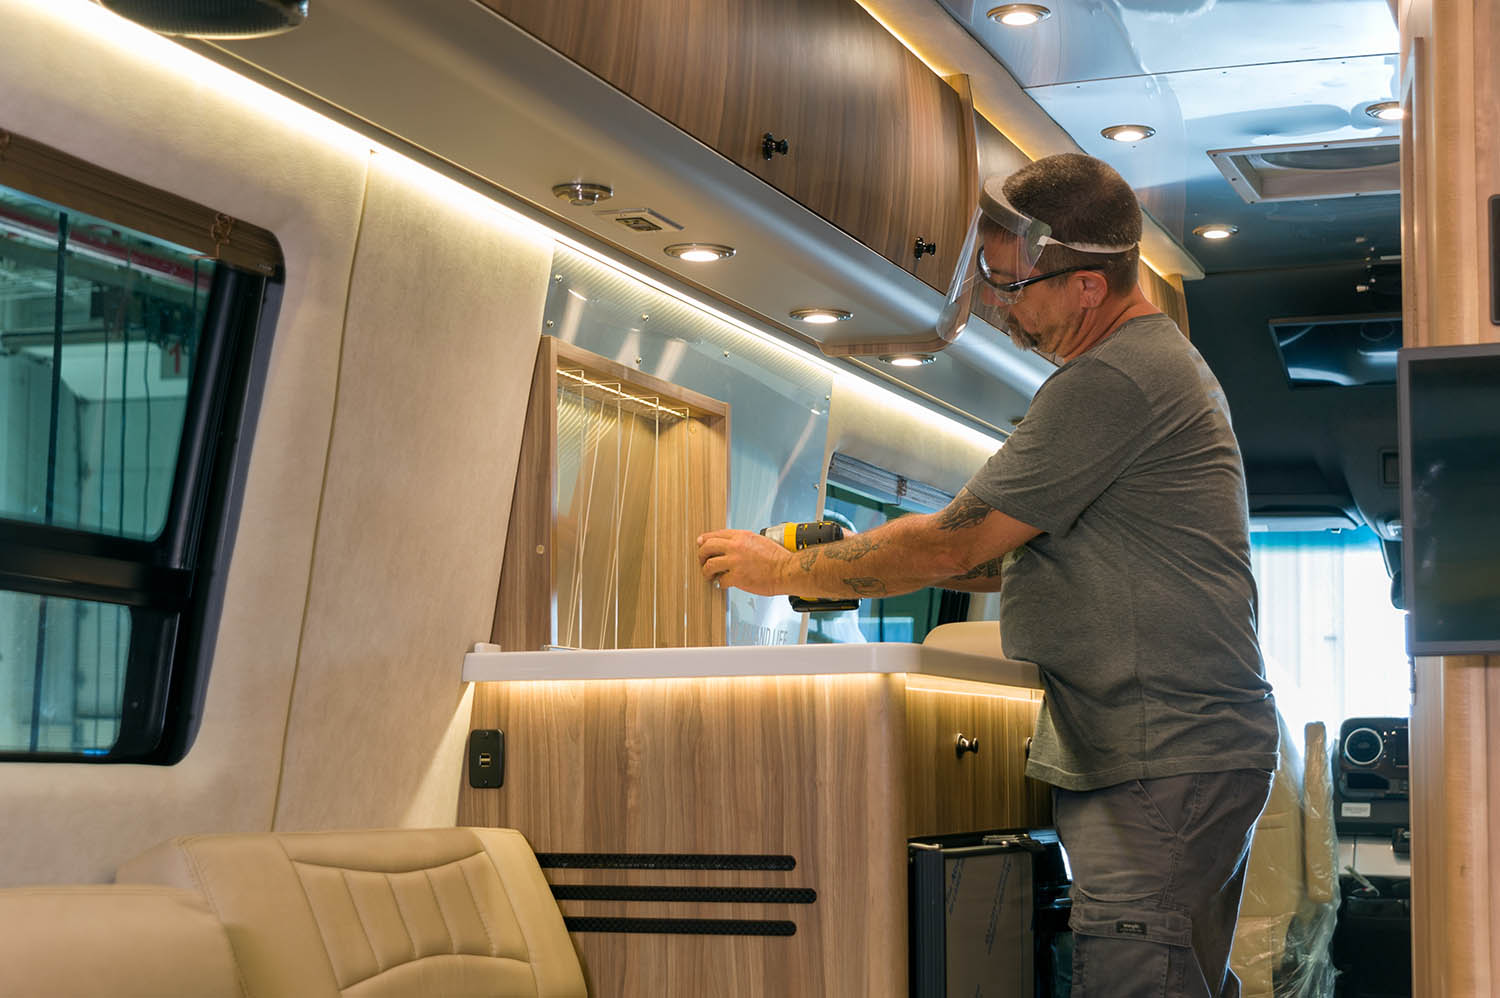 Airstream Touring Coach Craftsmanship